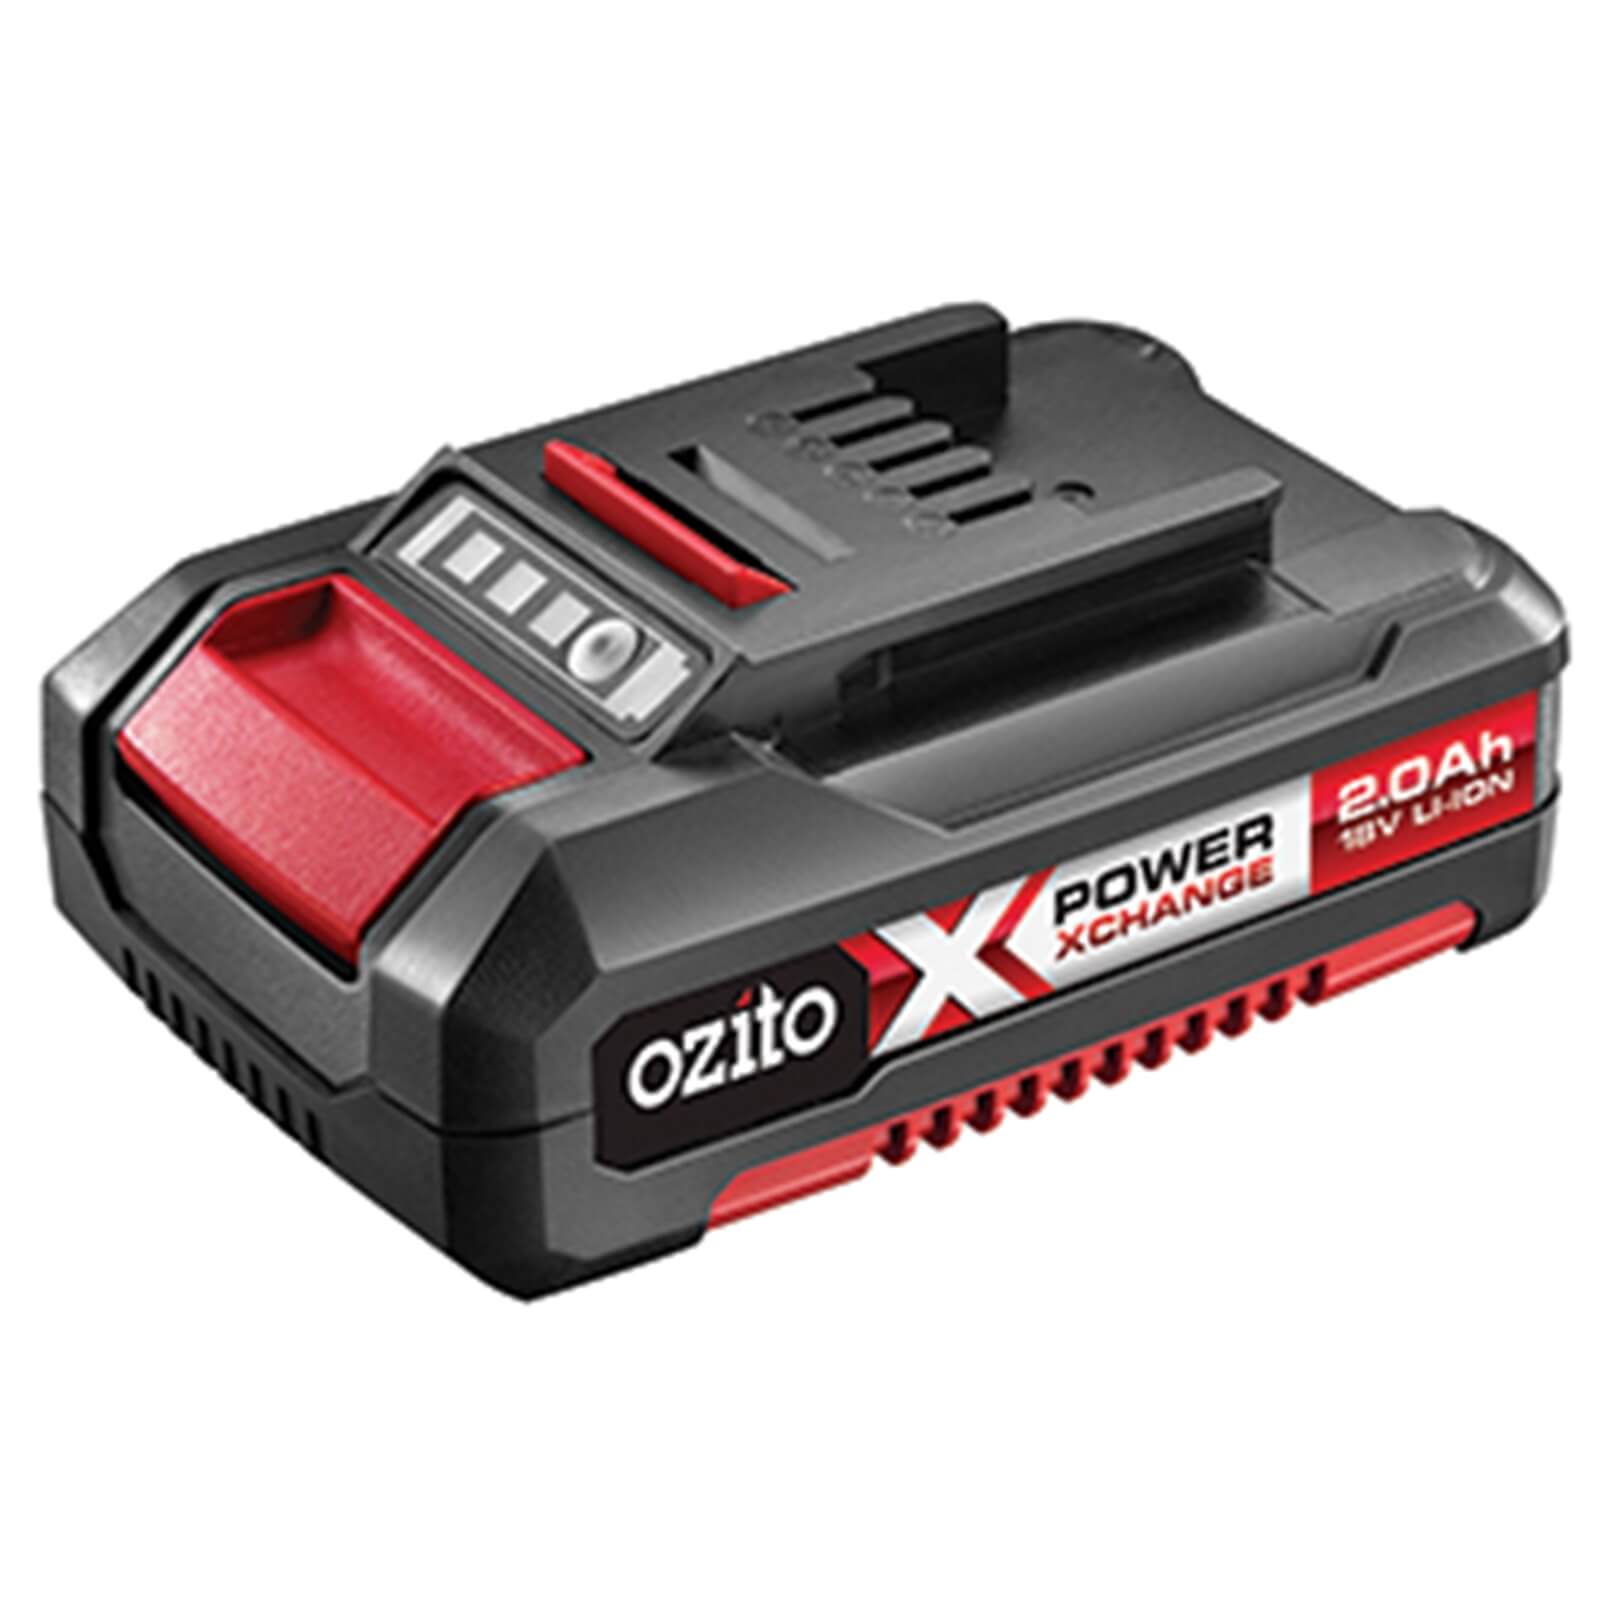 Ozito by Einhell Power X Change 18V 2Ah Battery